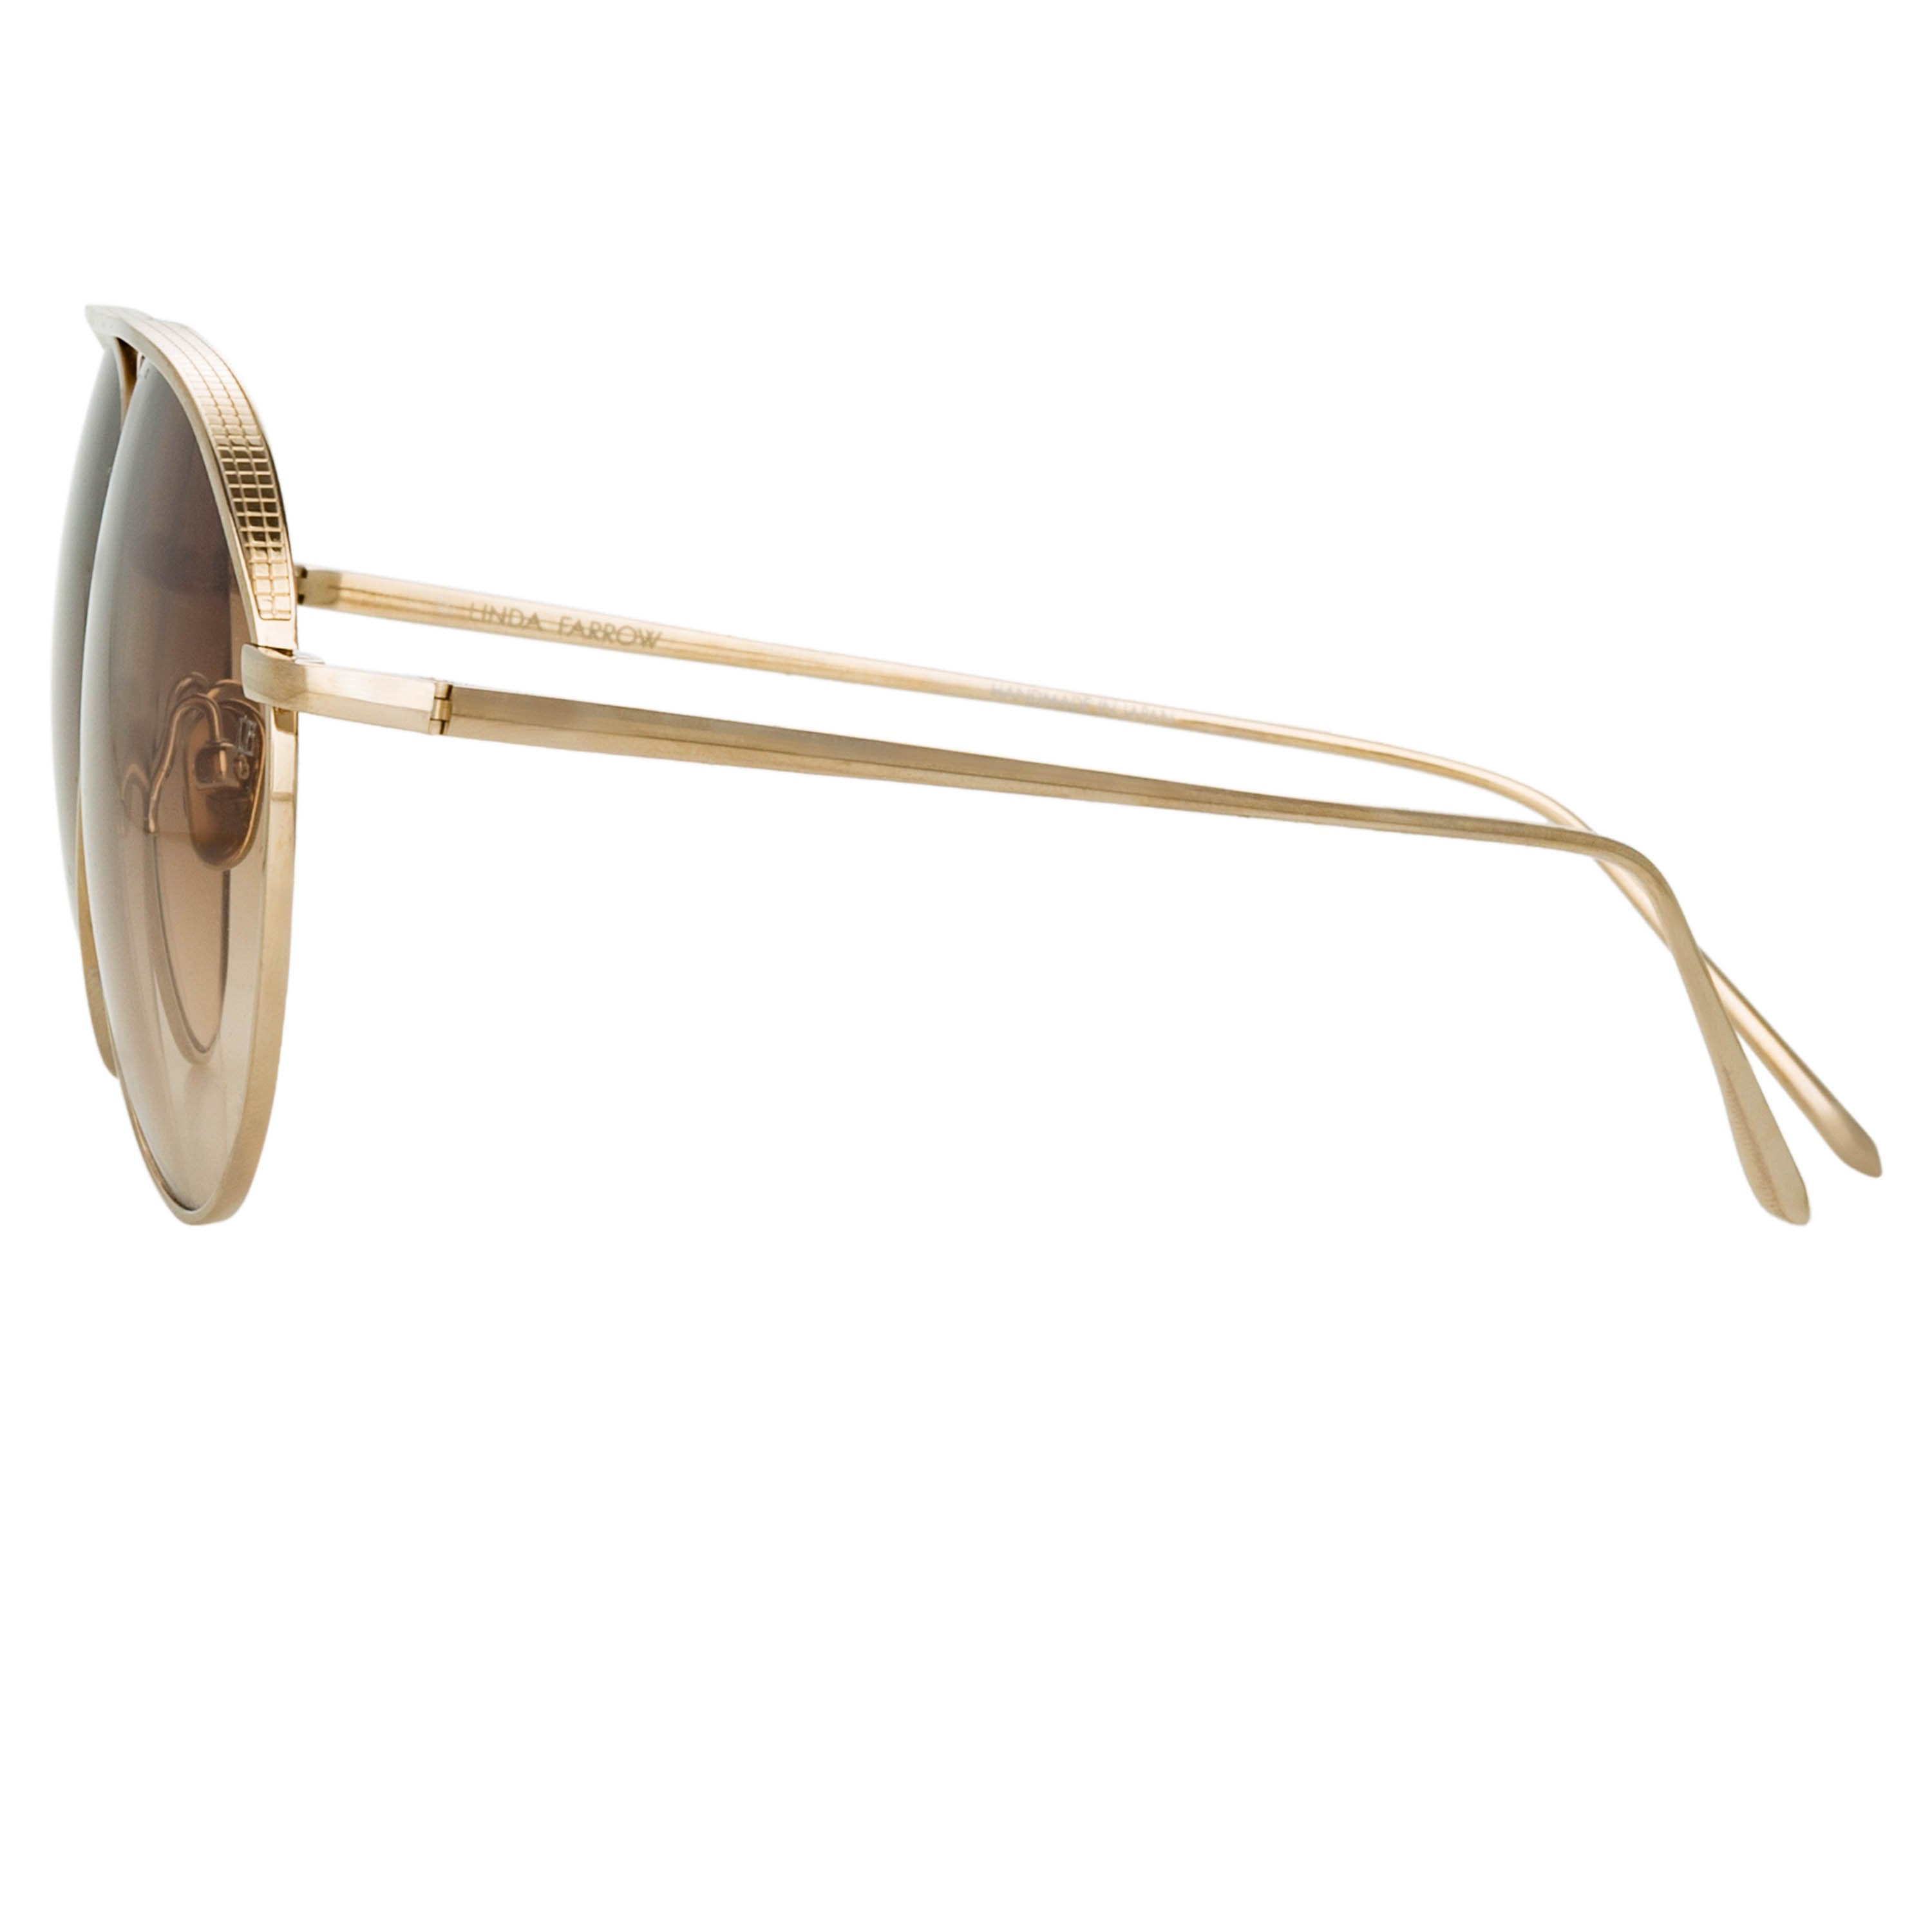 Color_LFL1078C6SUN - Roberts Aviator Sunglasses in Light Gold and Mocha